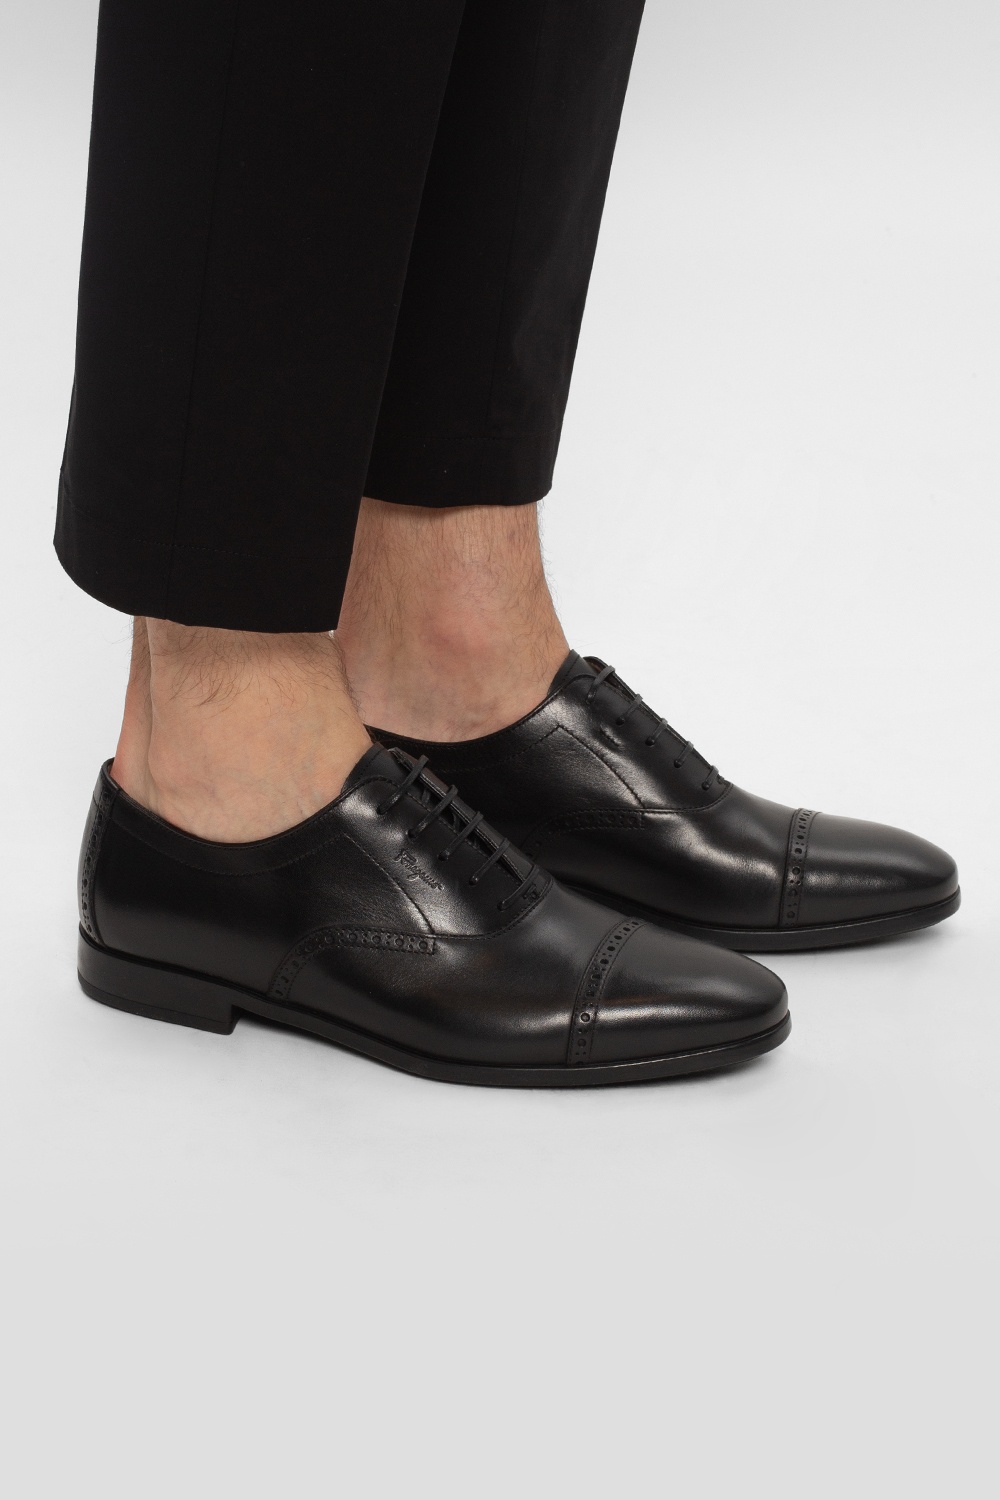 FERRAGAMO ‘Riley’ leather boot shoes